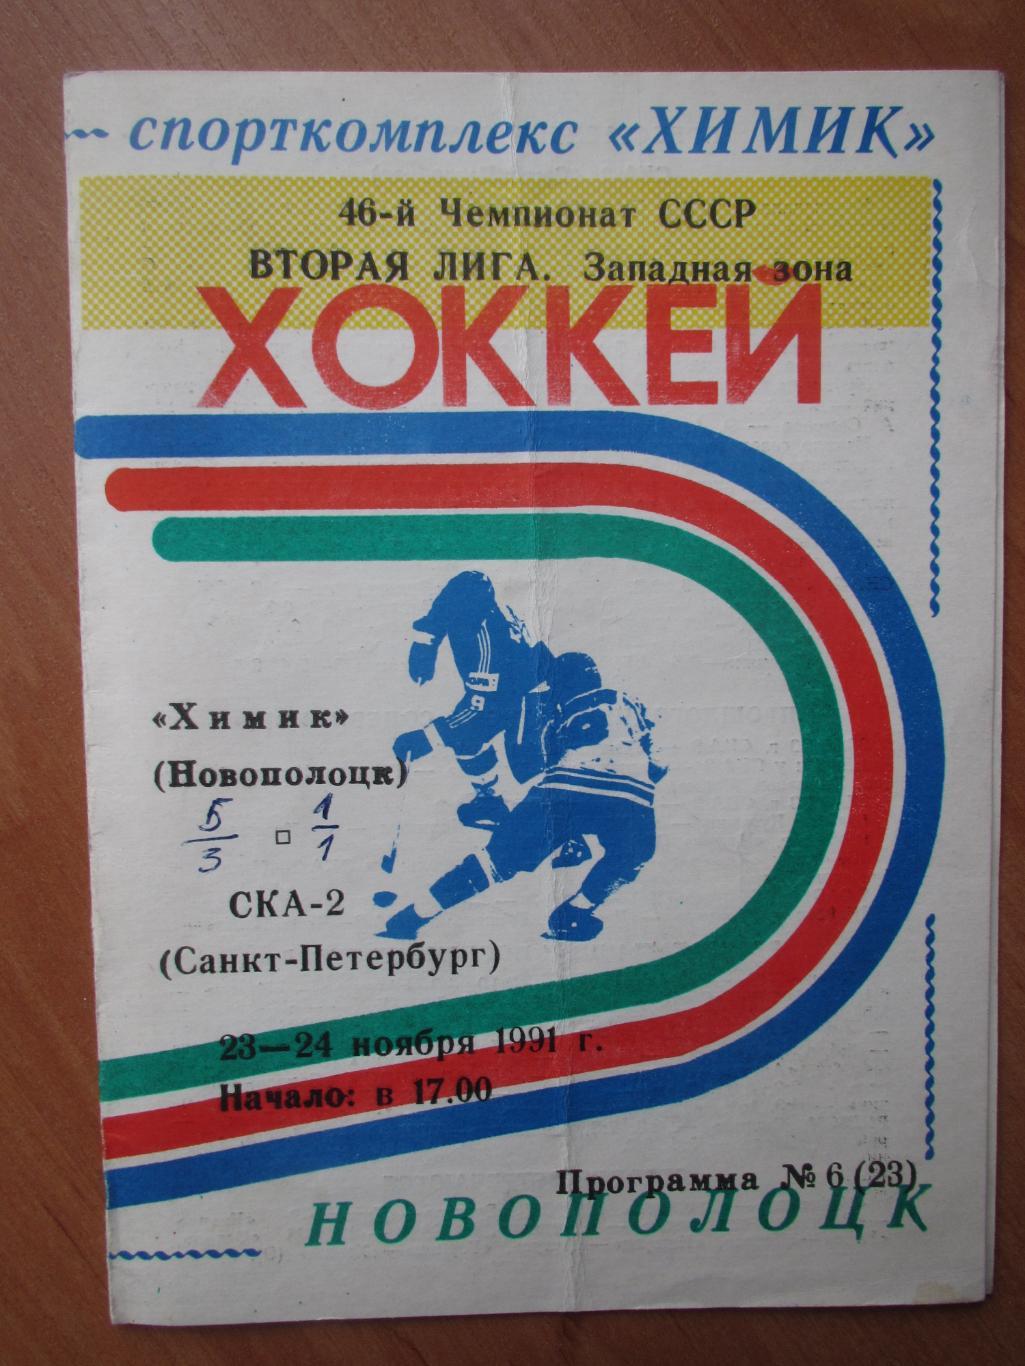 Химик Новополоцк-СКА-2 Санкт-Петербург 23-24.11.1991